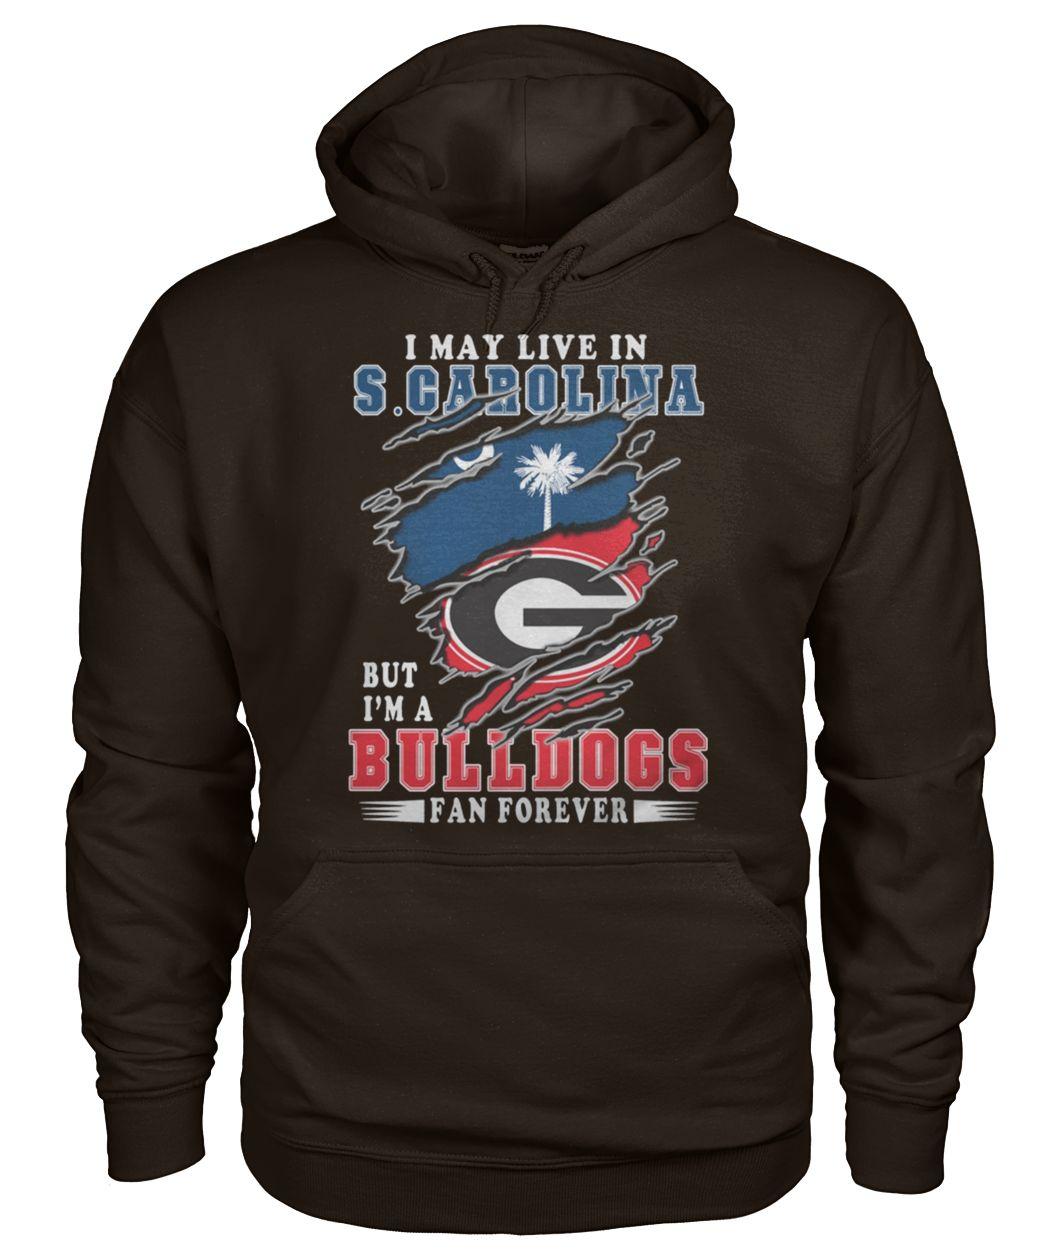 I may live in s carolina but I'm a bulldogs fan forever georgia bulldogs hoodie